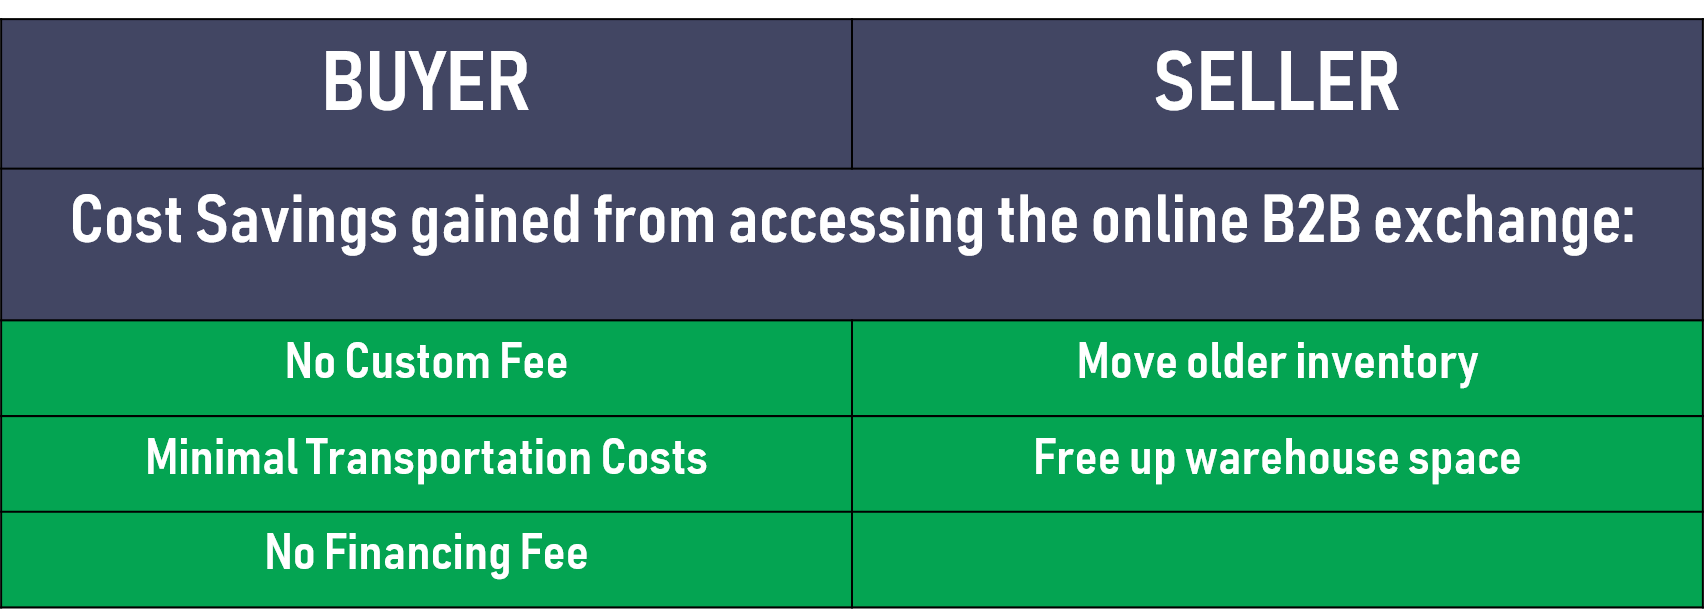 Cost_Savings_table